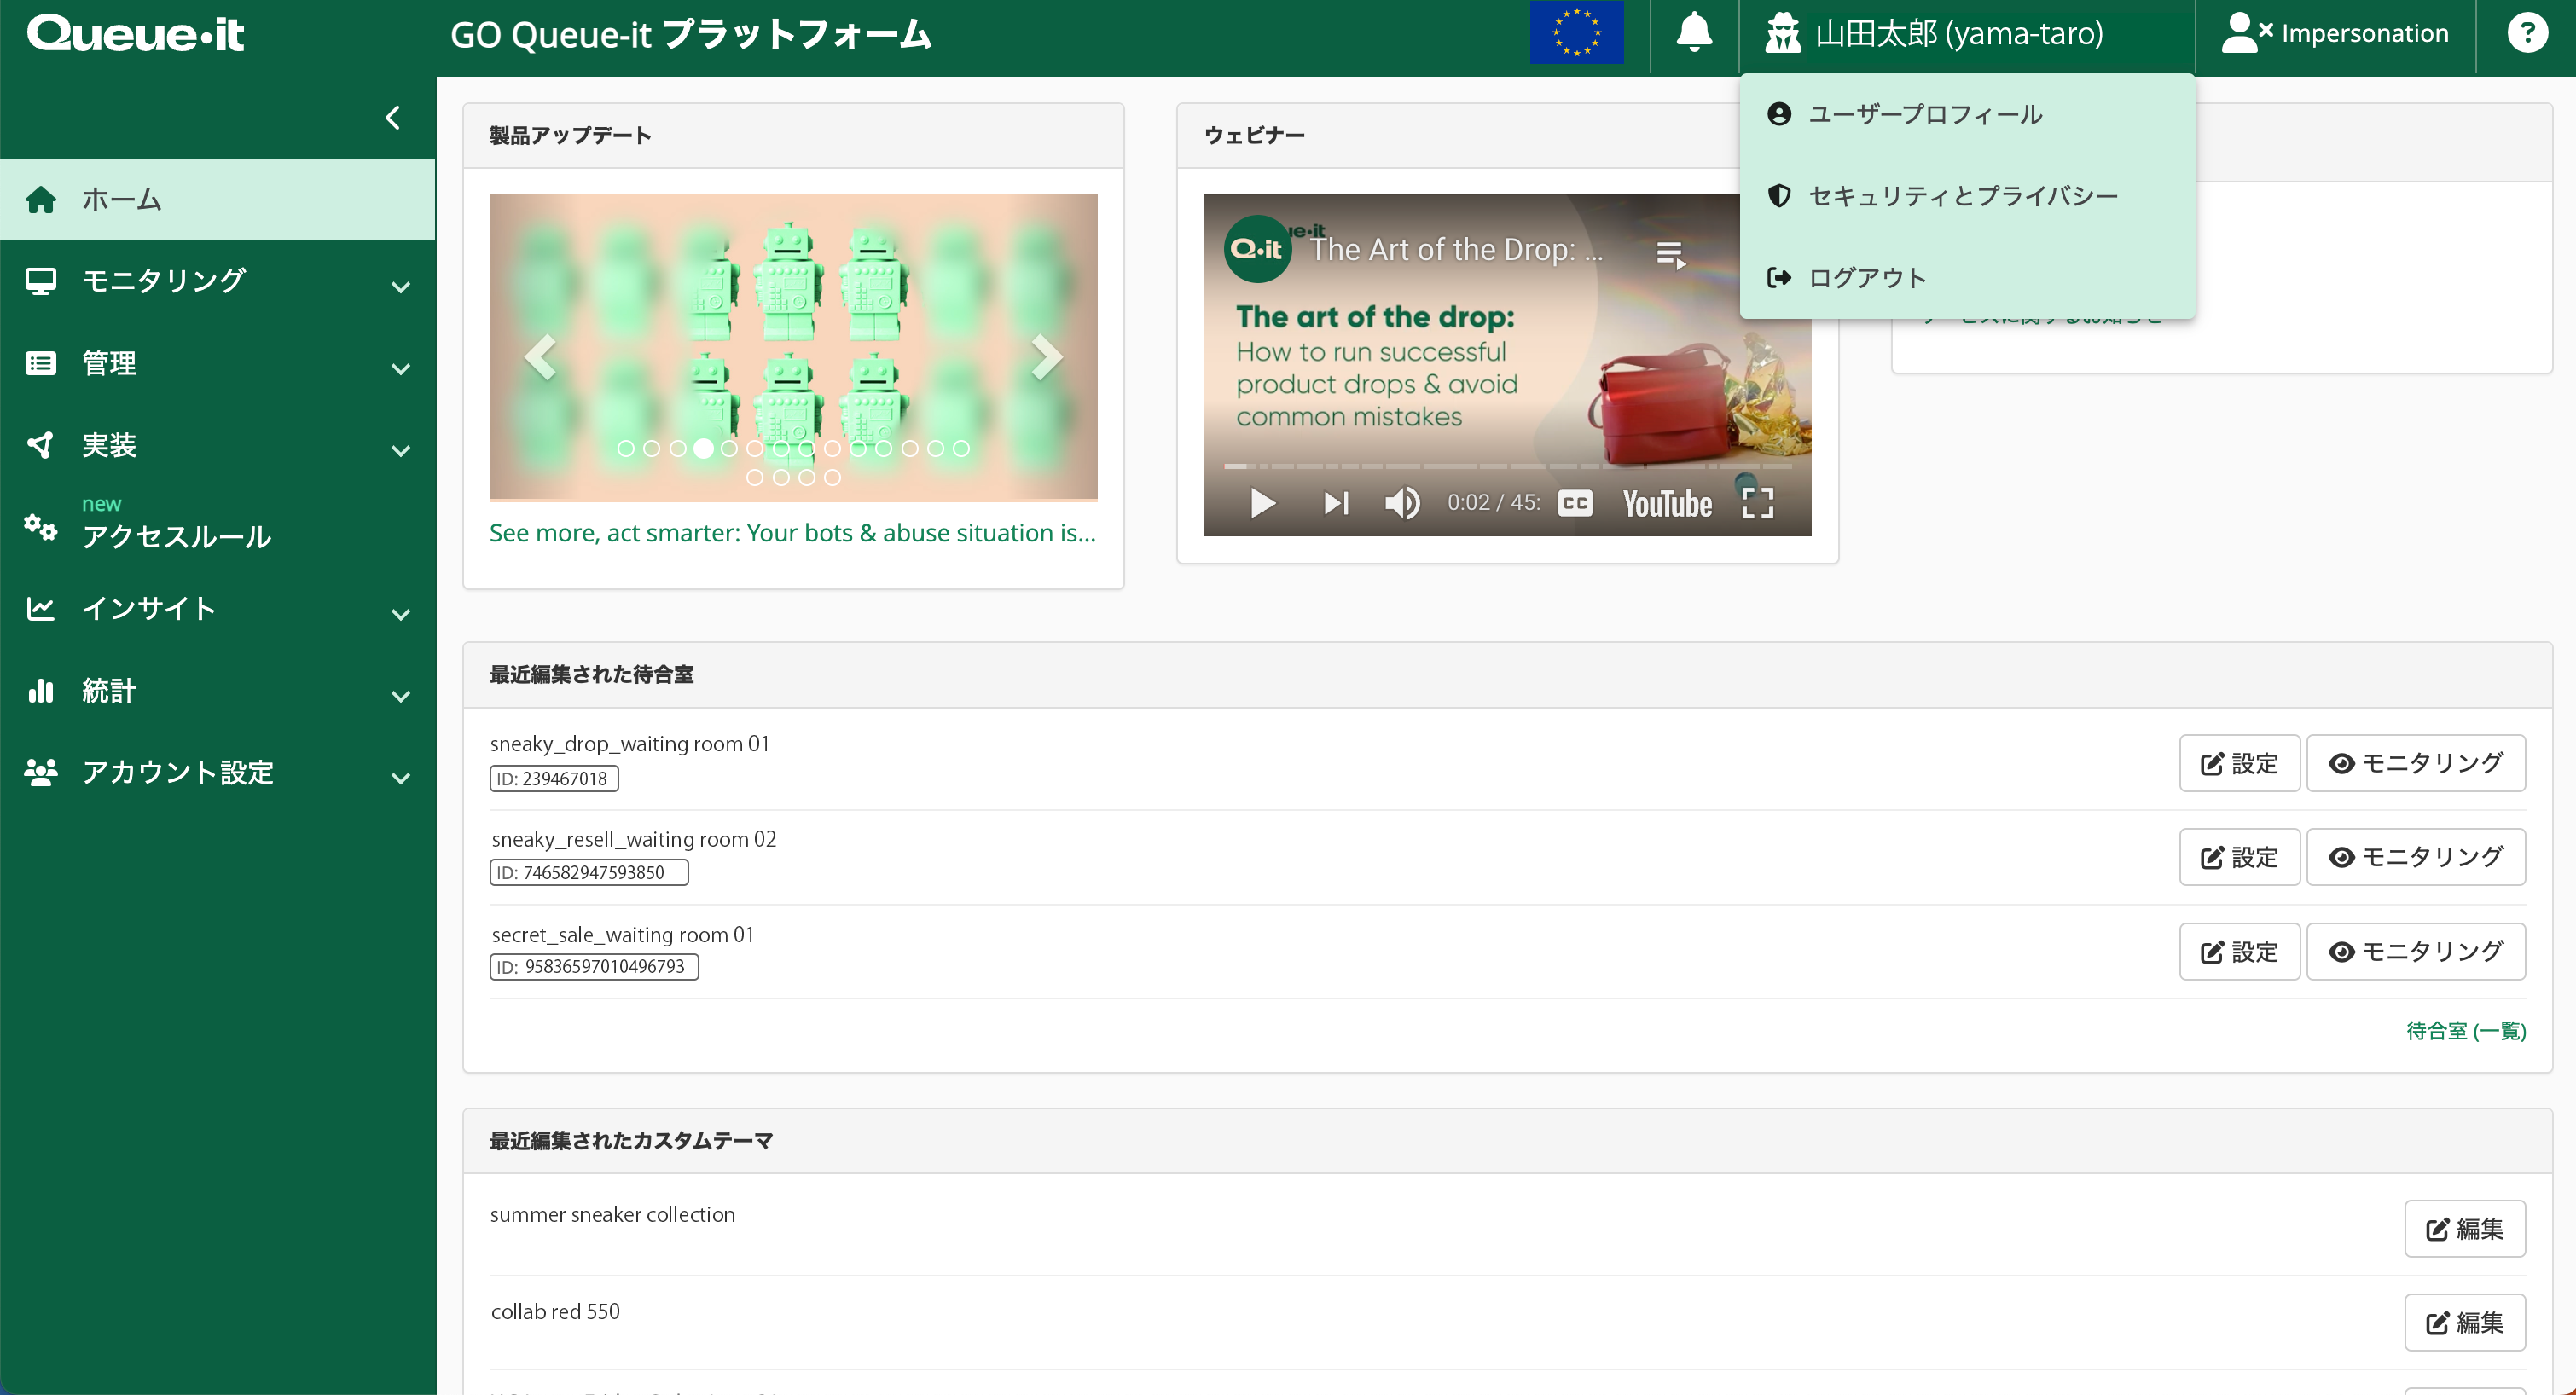 Japanese GO user profile